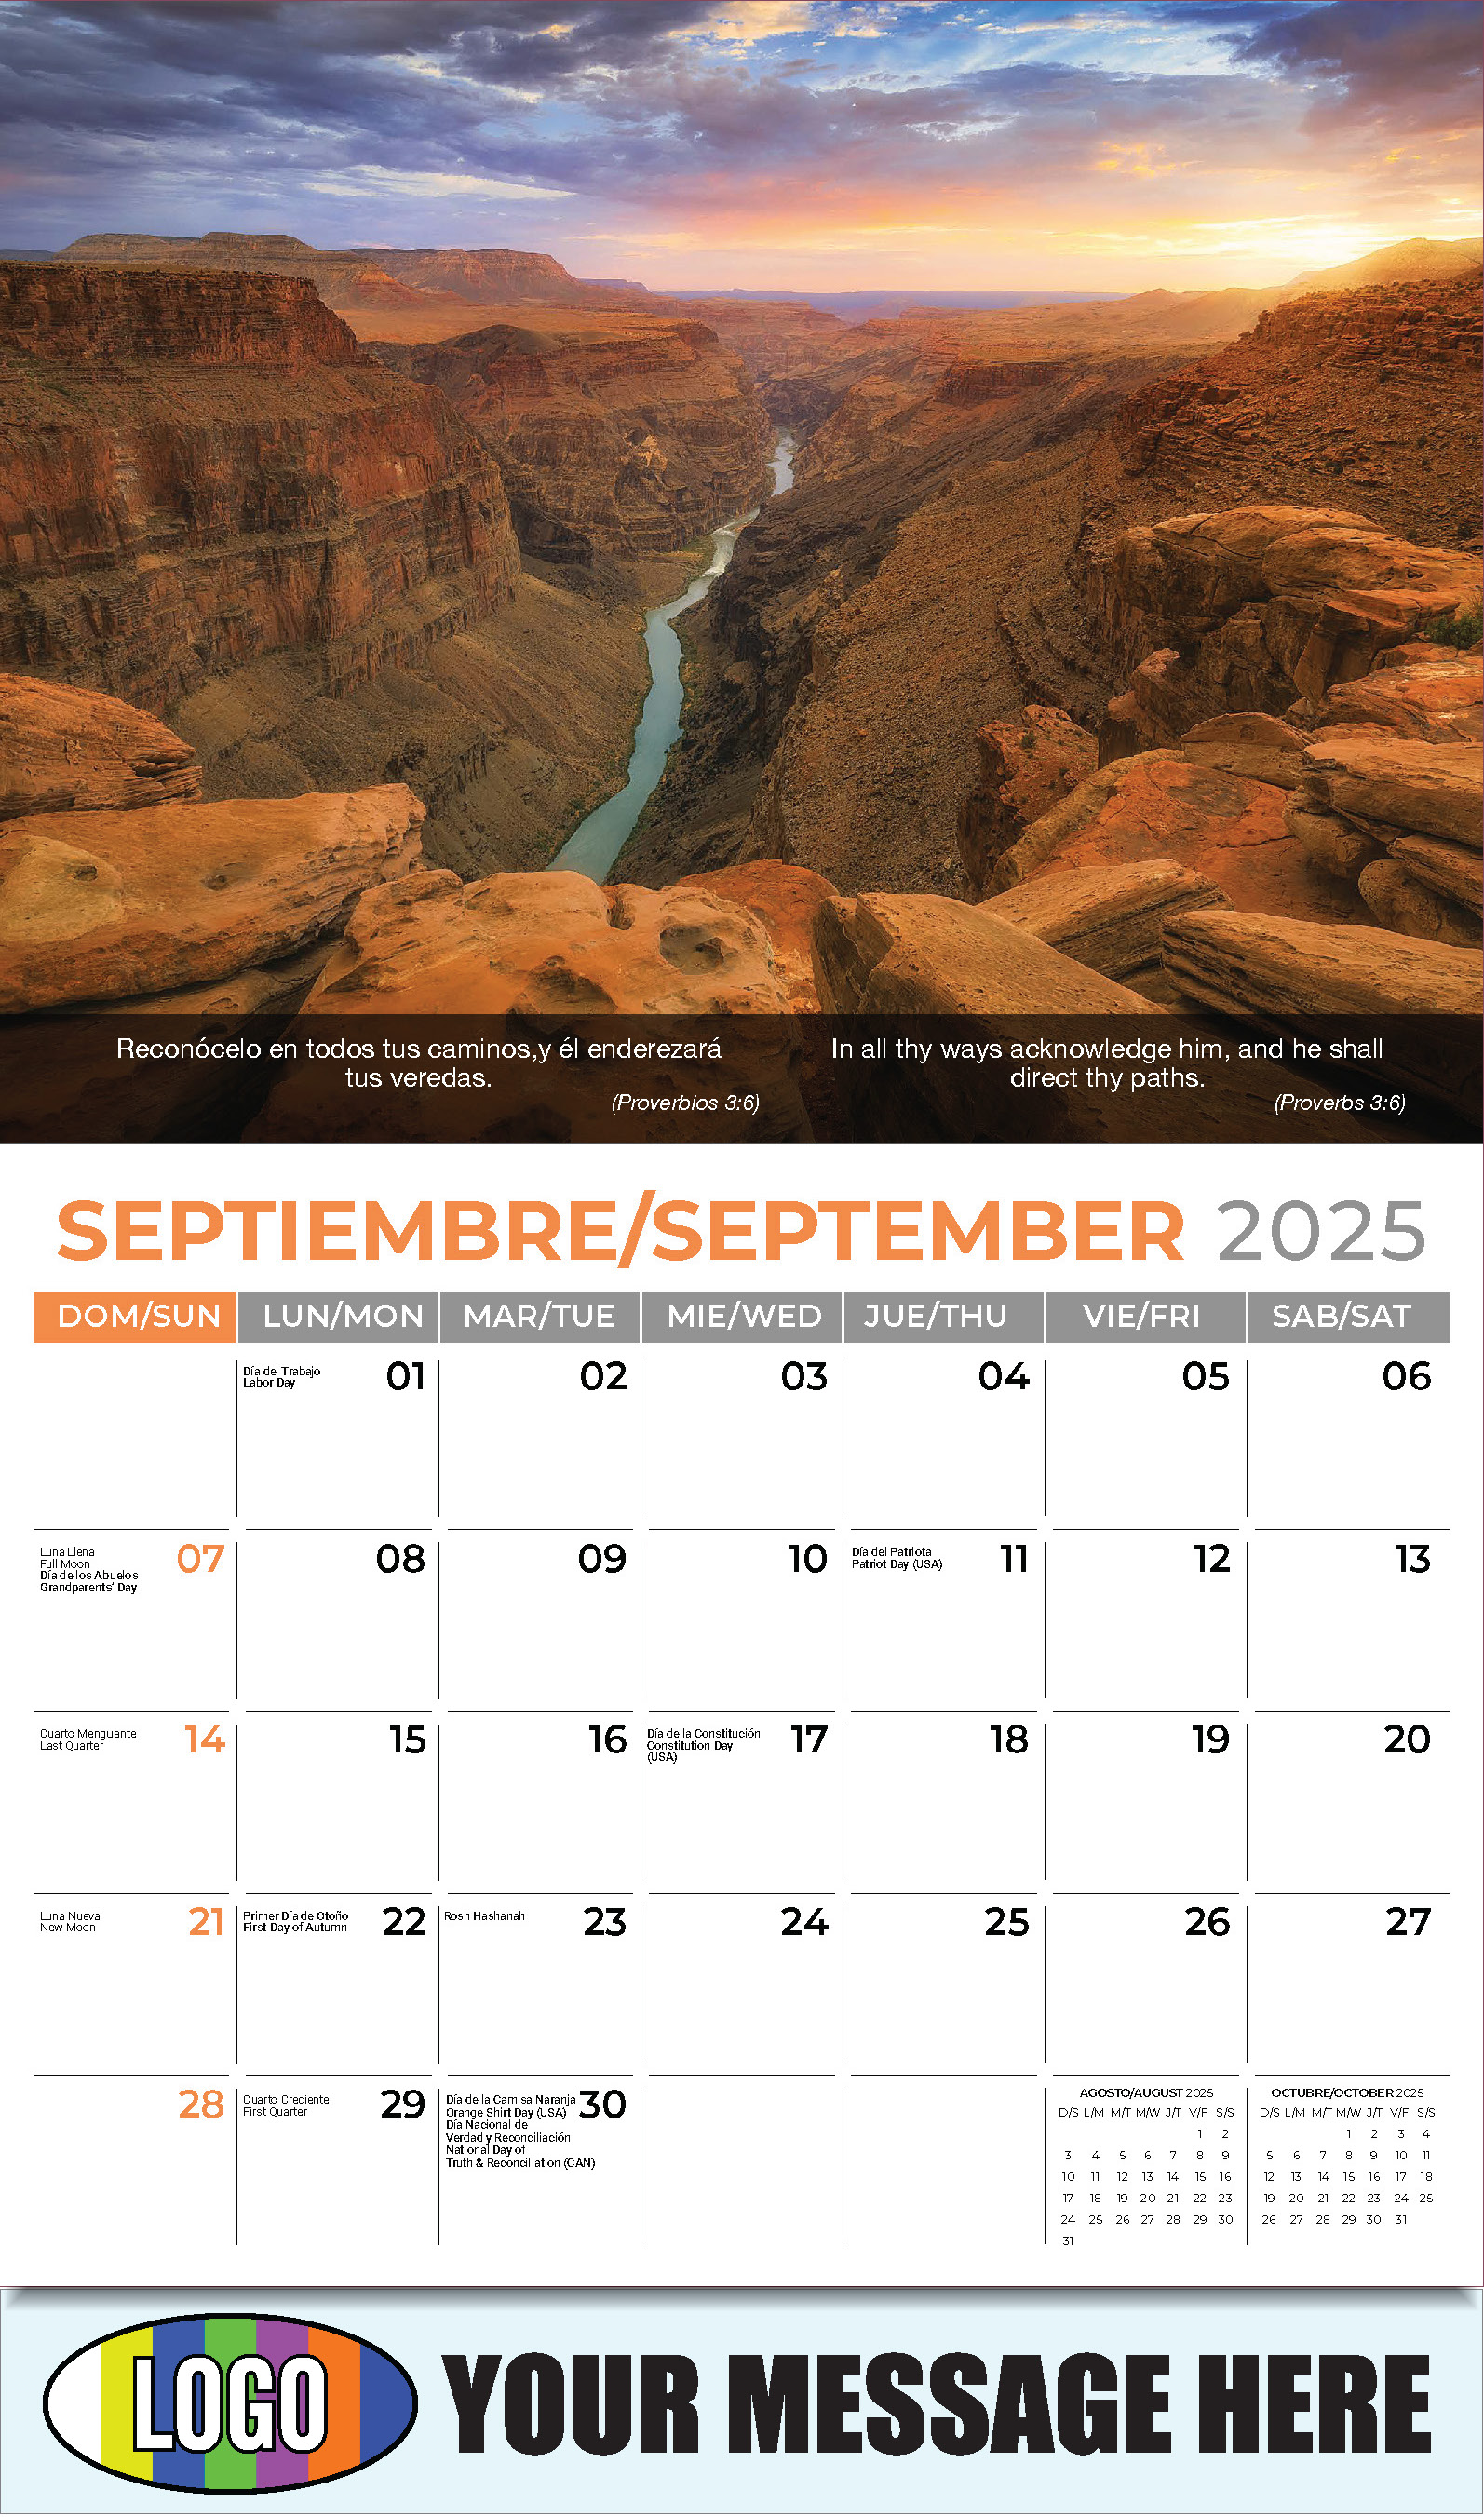 Faith Passages Bilingual 2025 Christian Business Advertising Calendar - September